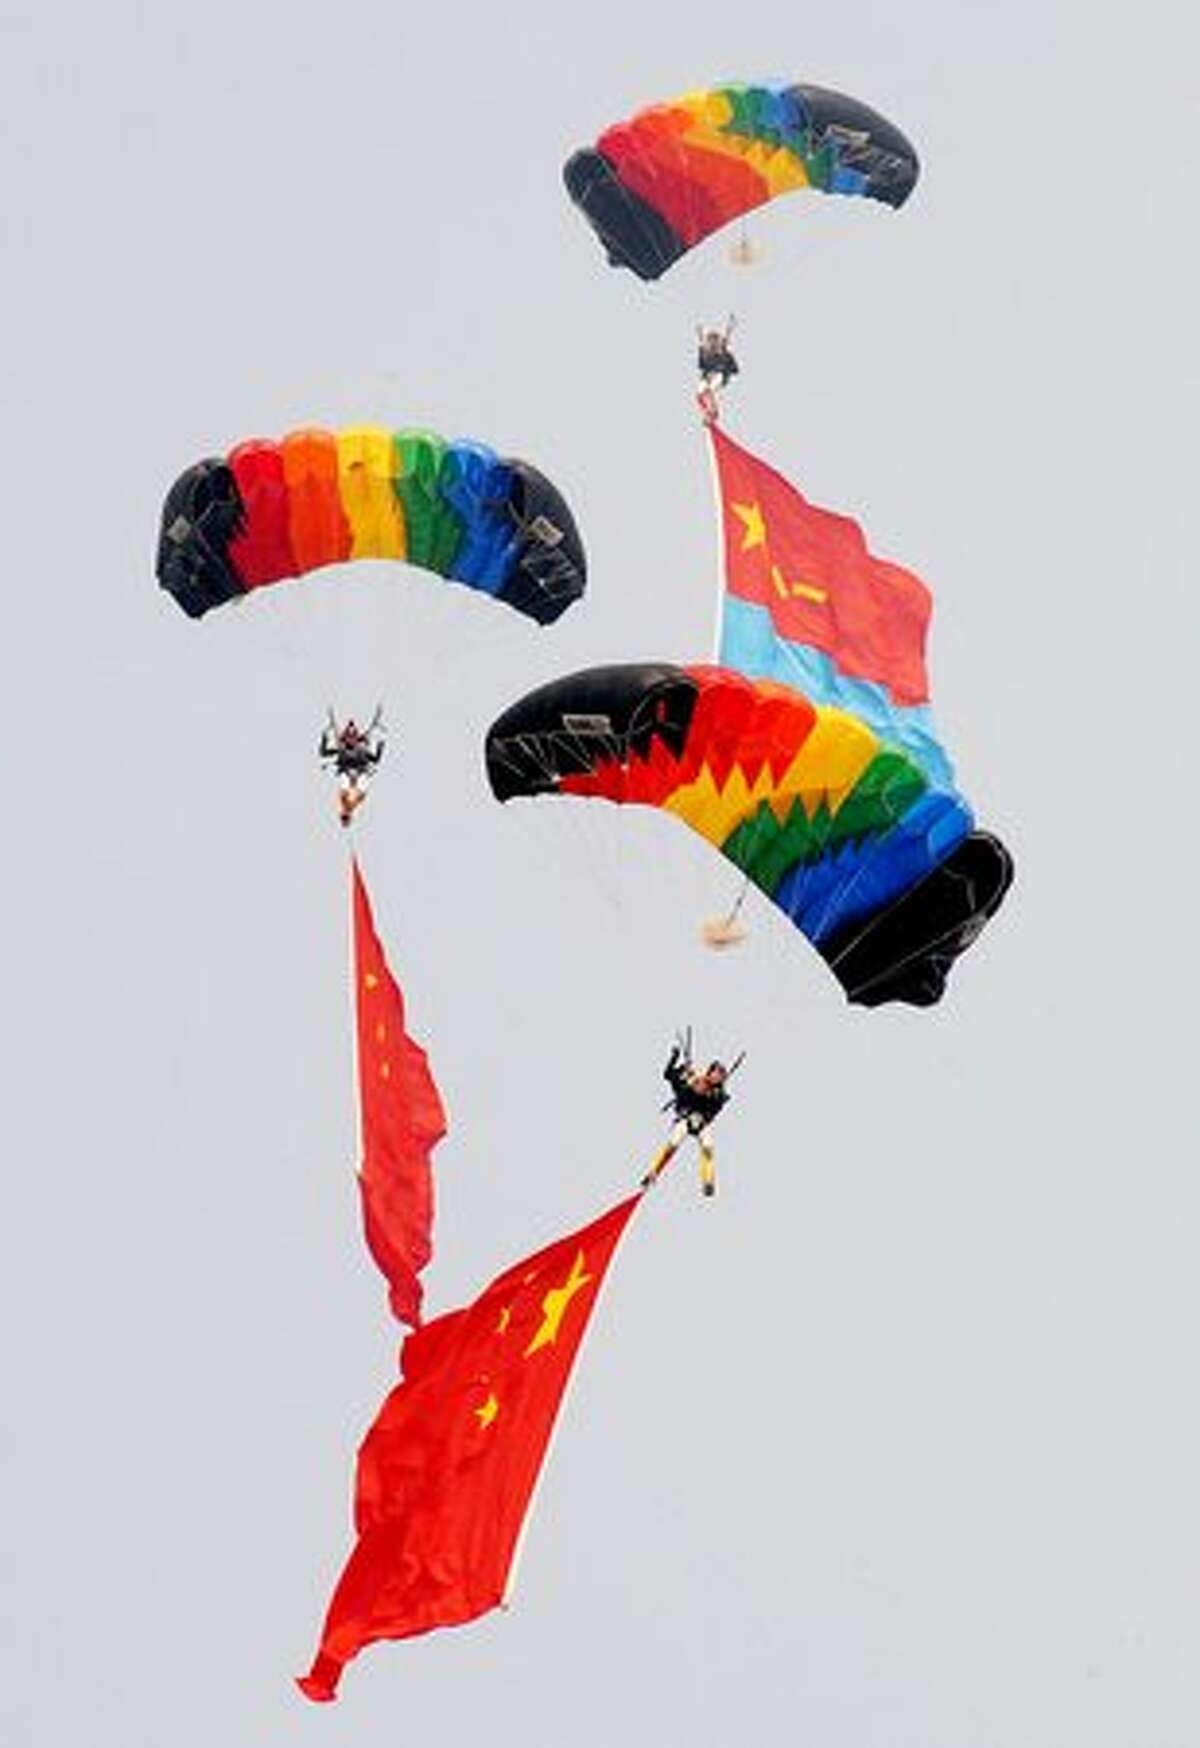 Parachutists perform aerobatics during China International Aviation and Aerospace Exhibition (also known as Airshow China and Zhuhai Airshow) in Zhuhai, China.